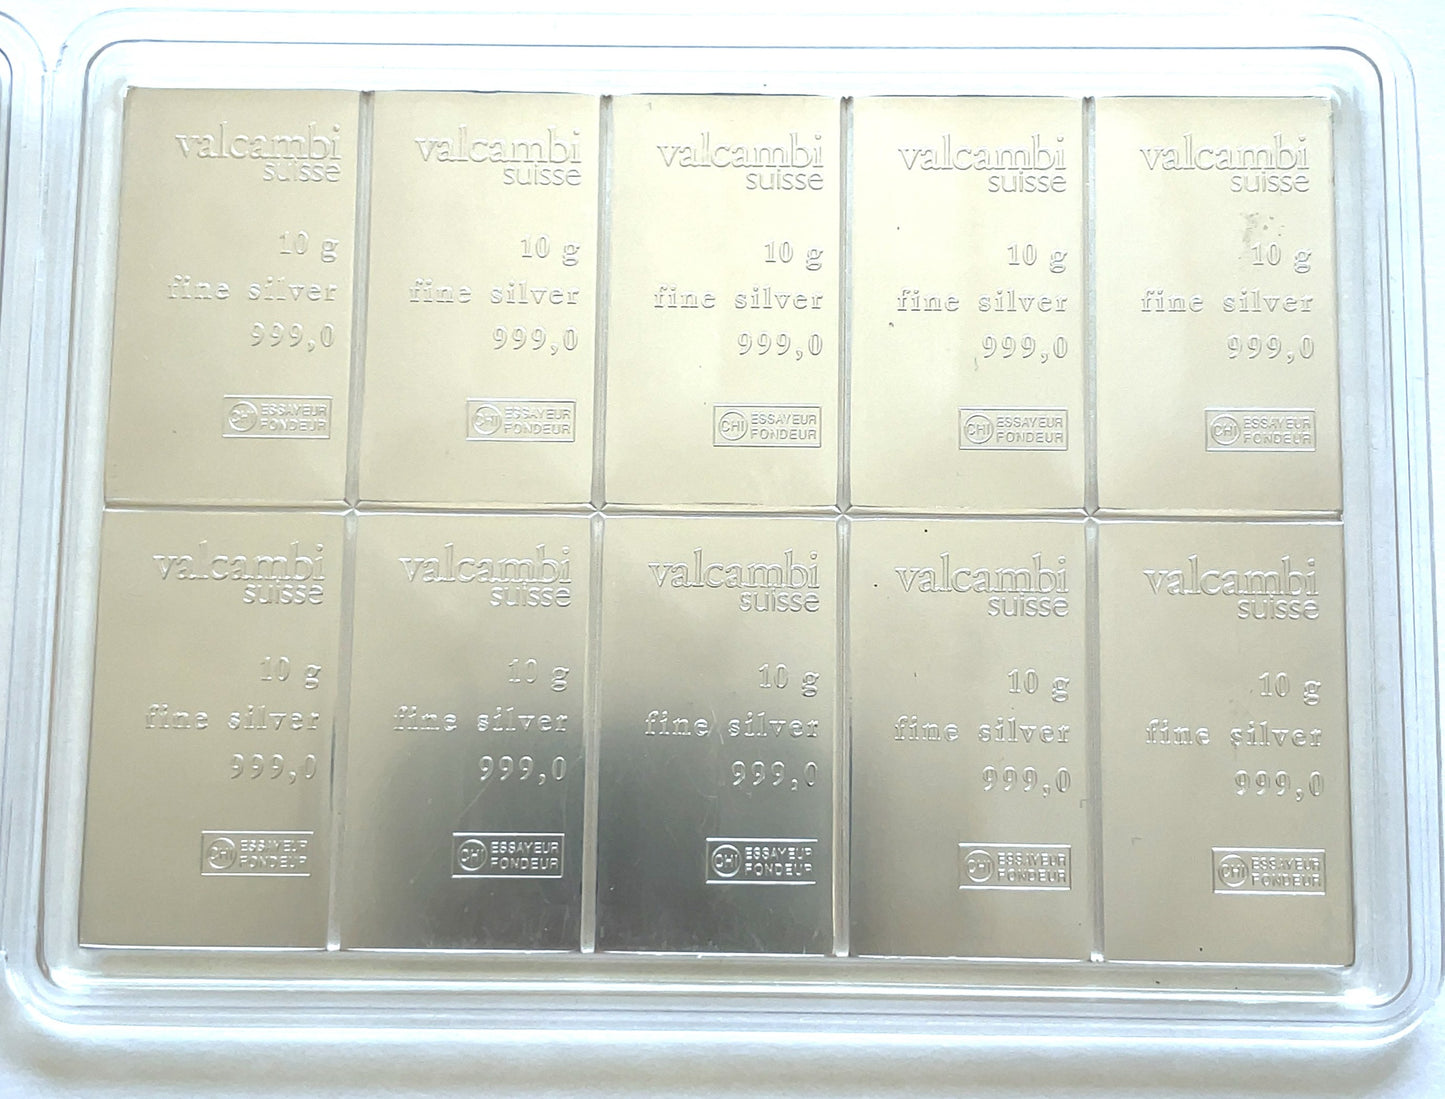 Valcambi Suisse 999 100g Fine Silver CombiBar 10 x 10 g Assay Card Break Apart